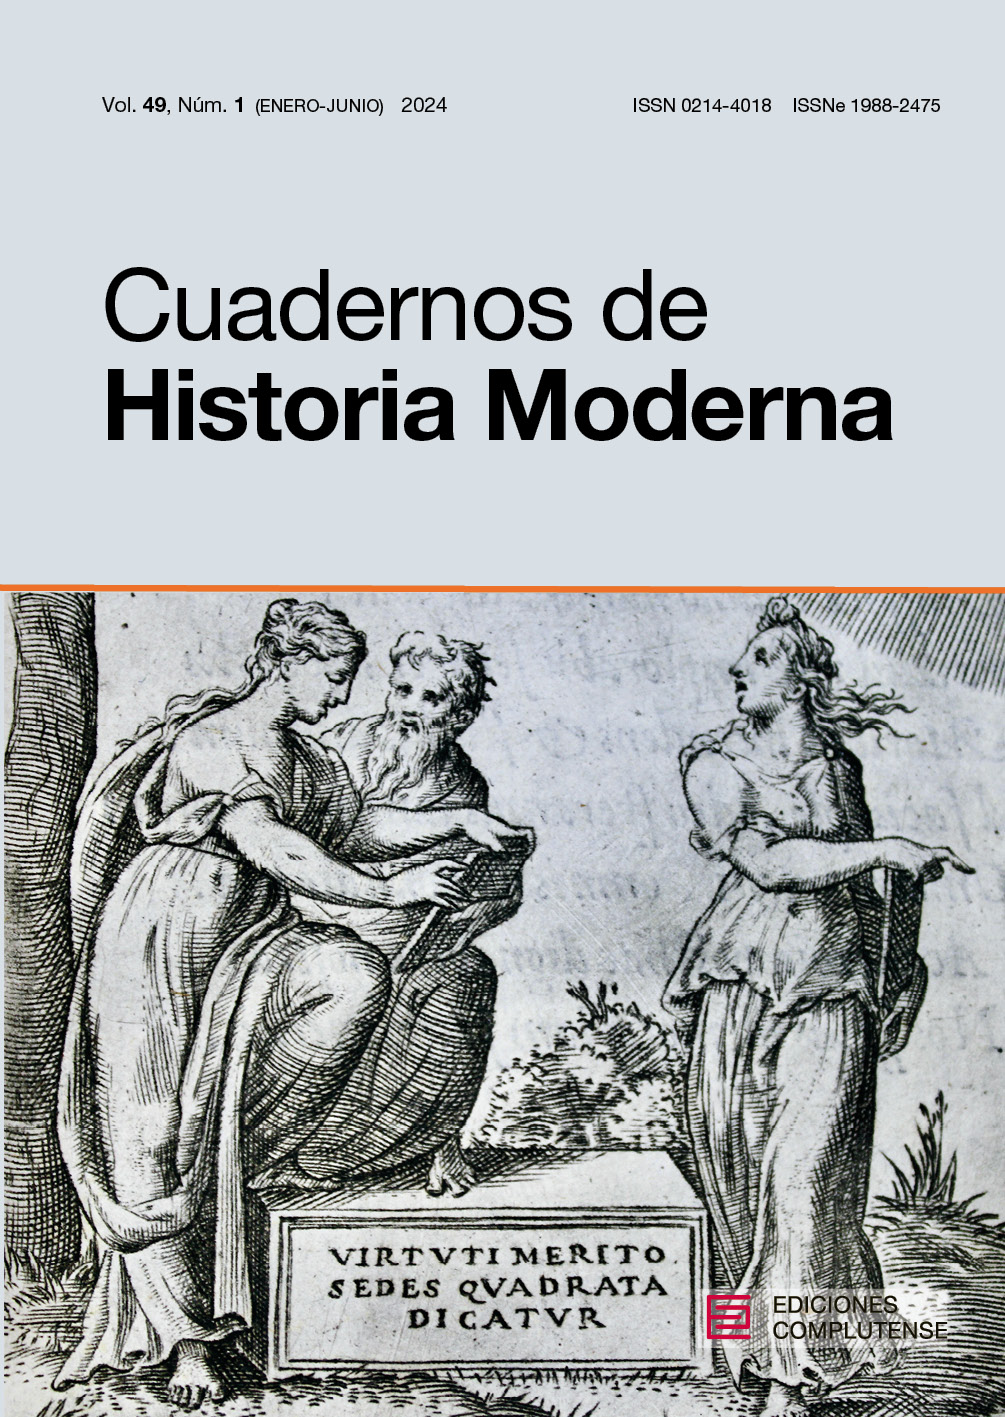 Cubierta Cuadernos de Historia Moderna 49(1) 2024